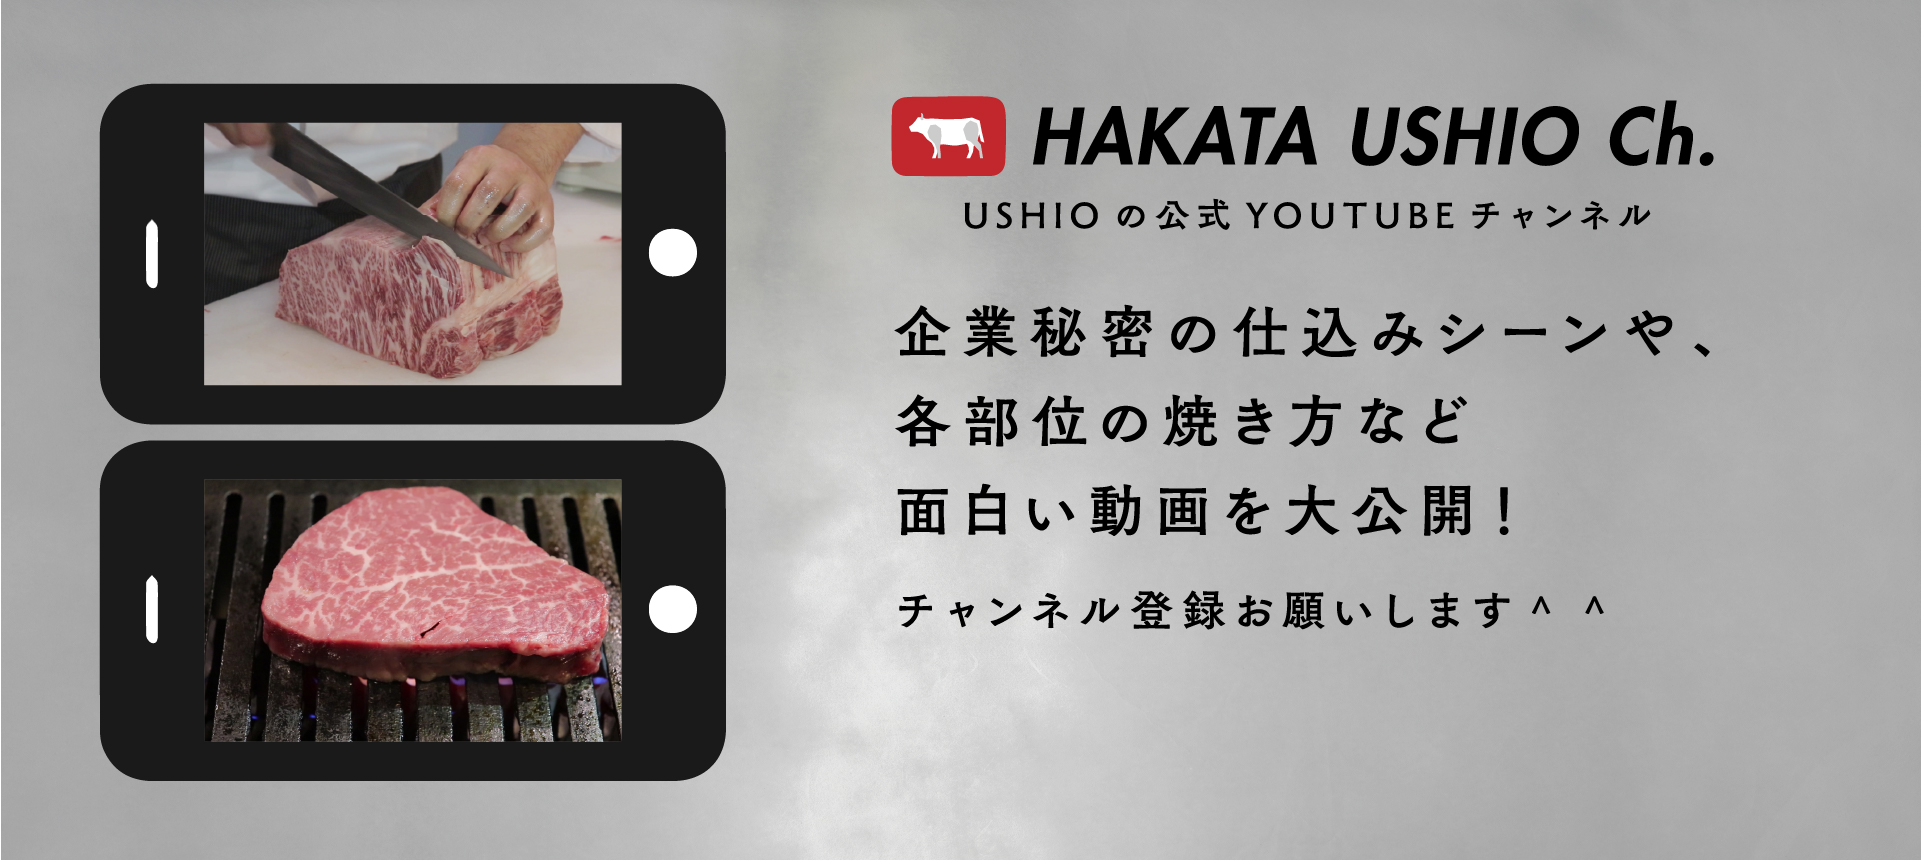 HAKATA USHIO Ch. USHIOの公式YOUTUBE チェンネル